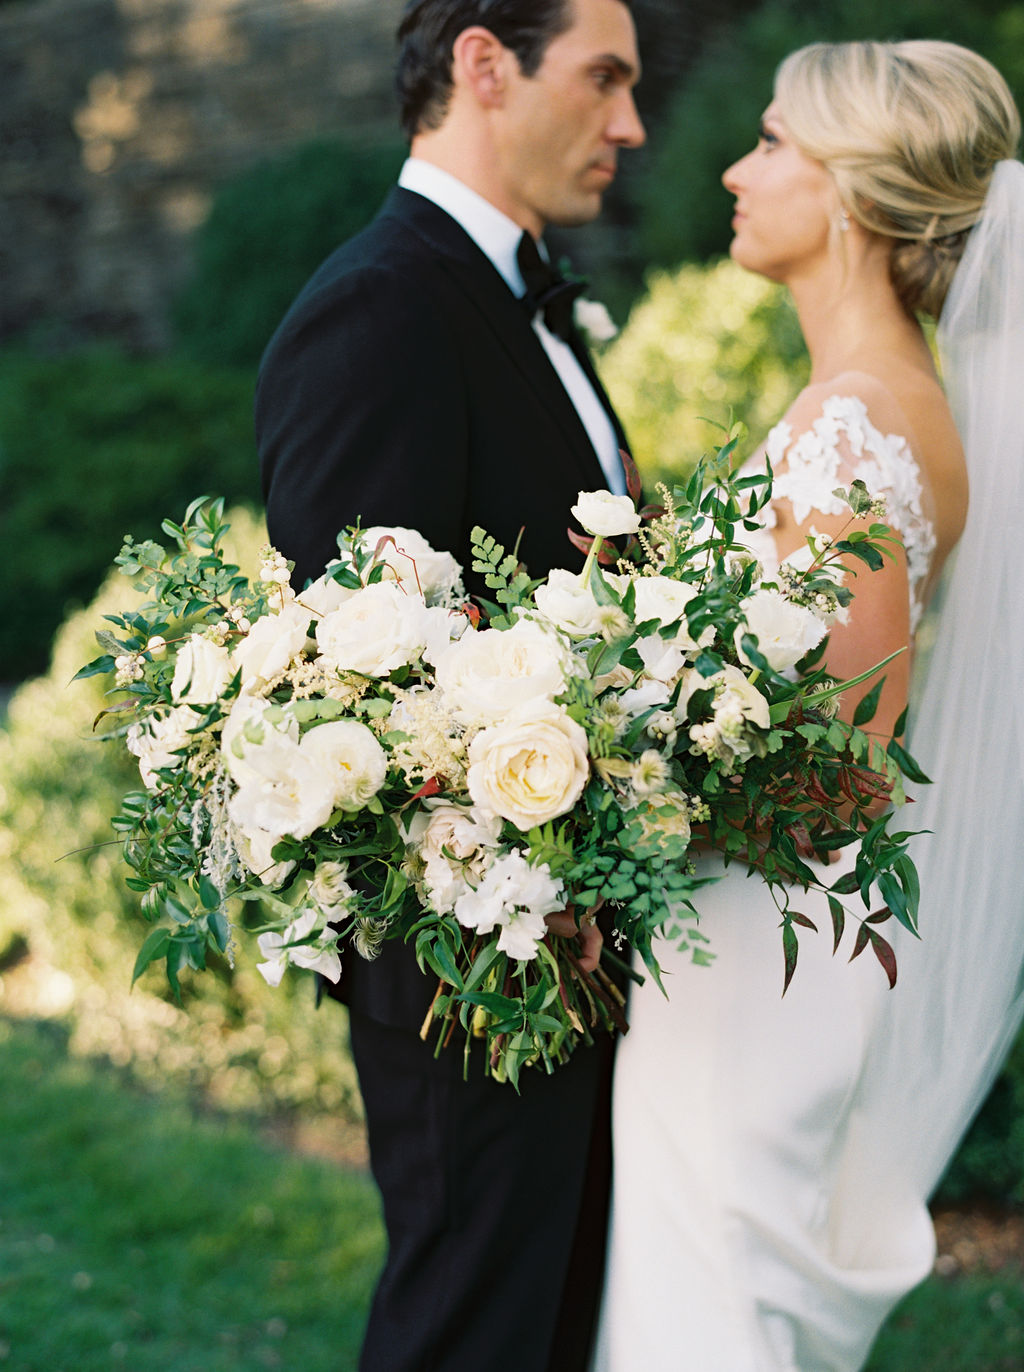 Natural, organic bridal bouquet with white garden roses, ranunculus, and lush greenery. Nashville, TN Wedding Florist.